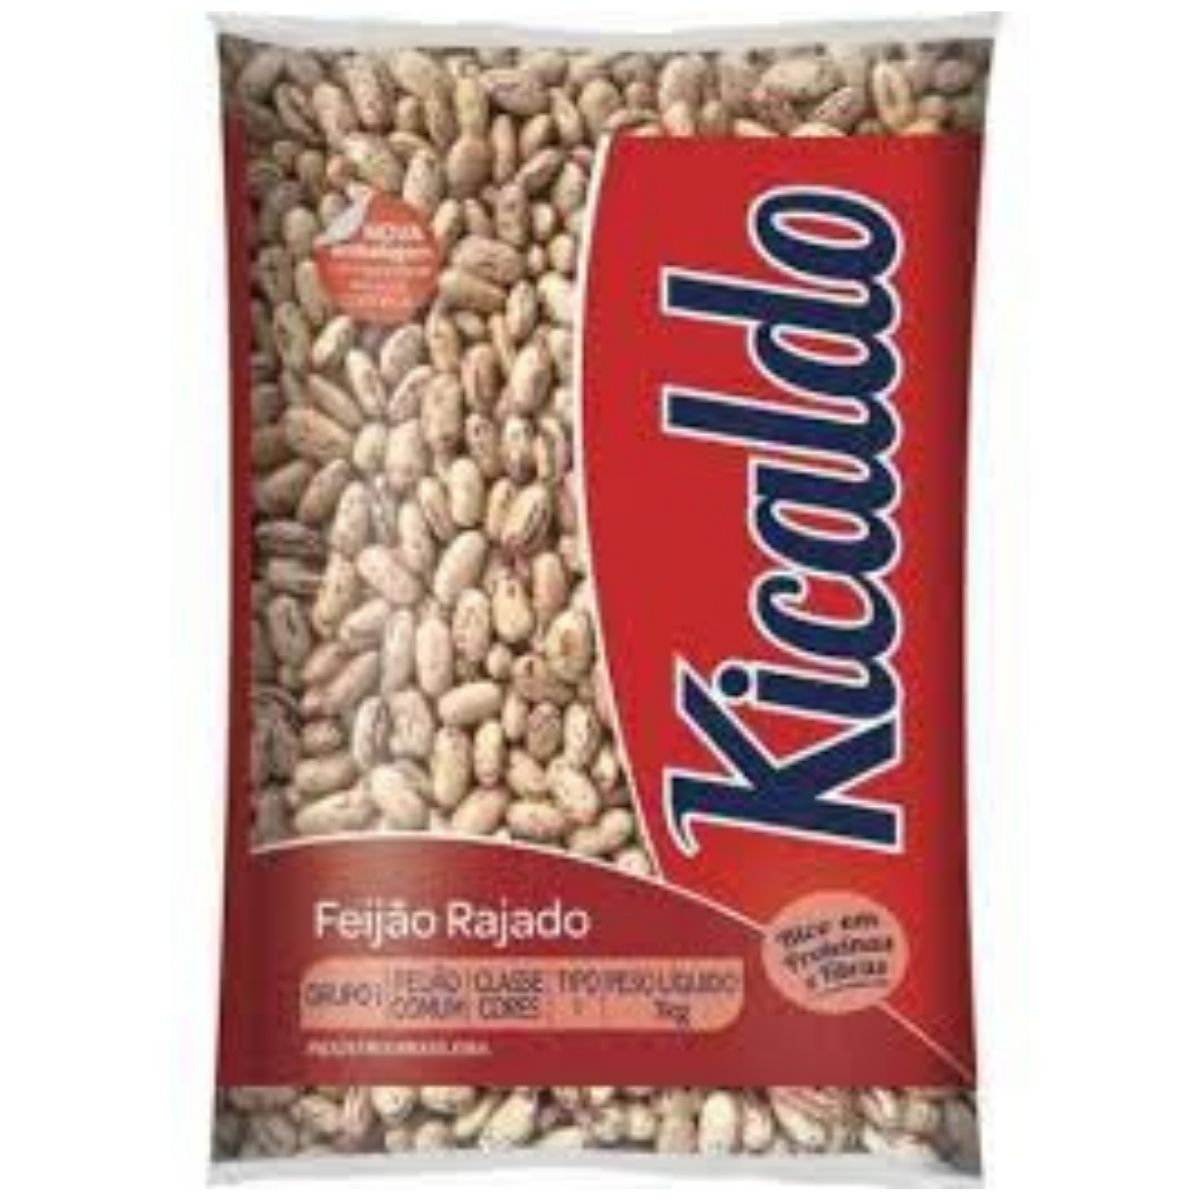 feijao-rajado-kicaldo-1kg-1.jpg